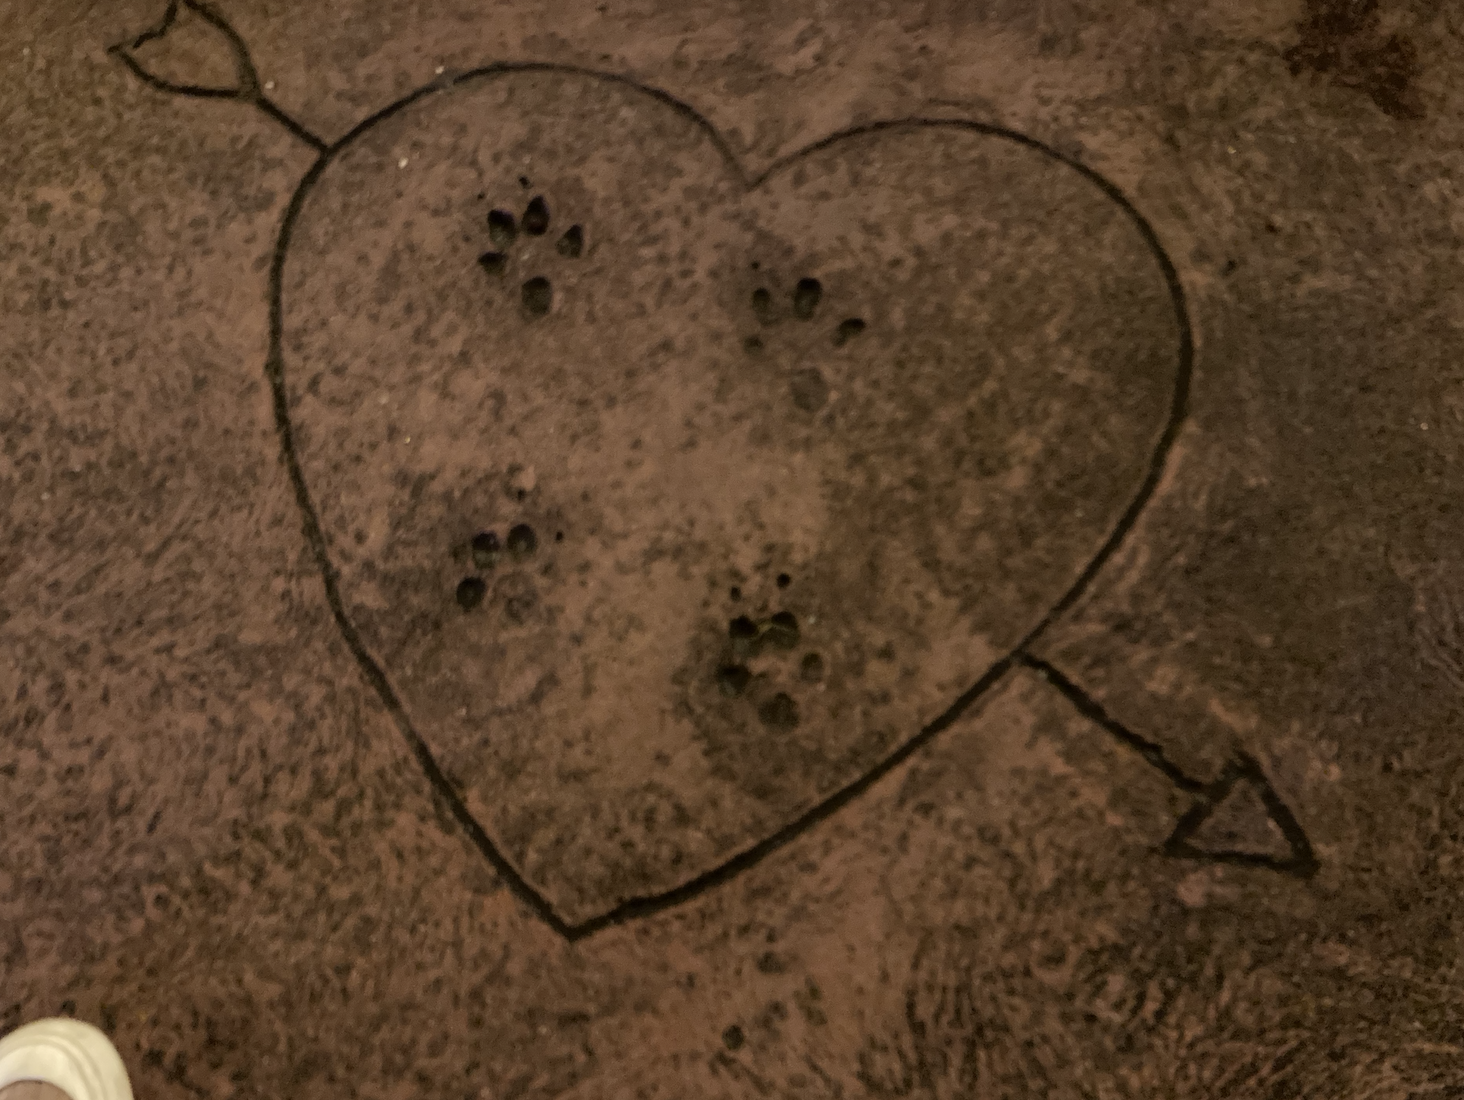 A heart surrounding paw prints